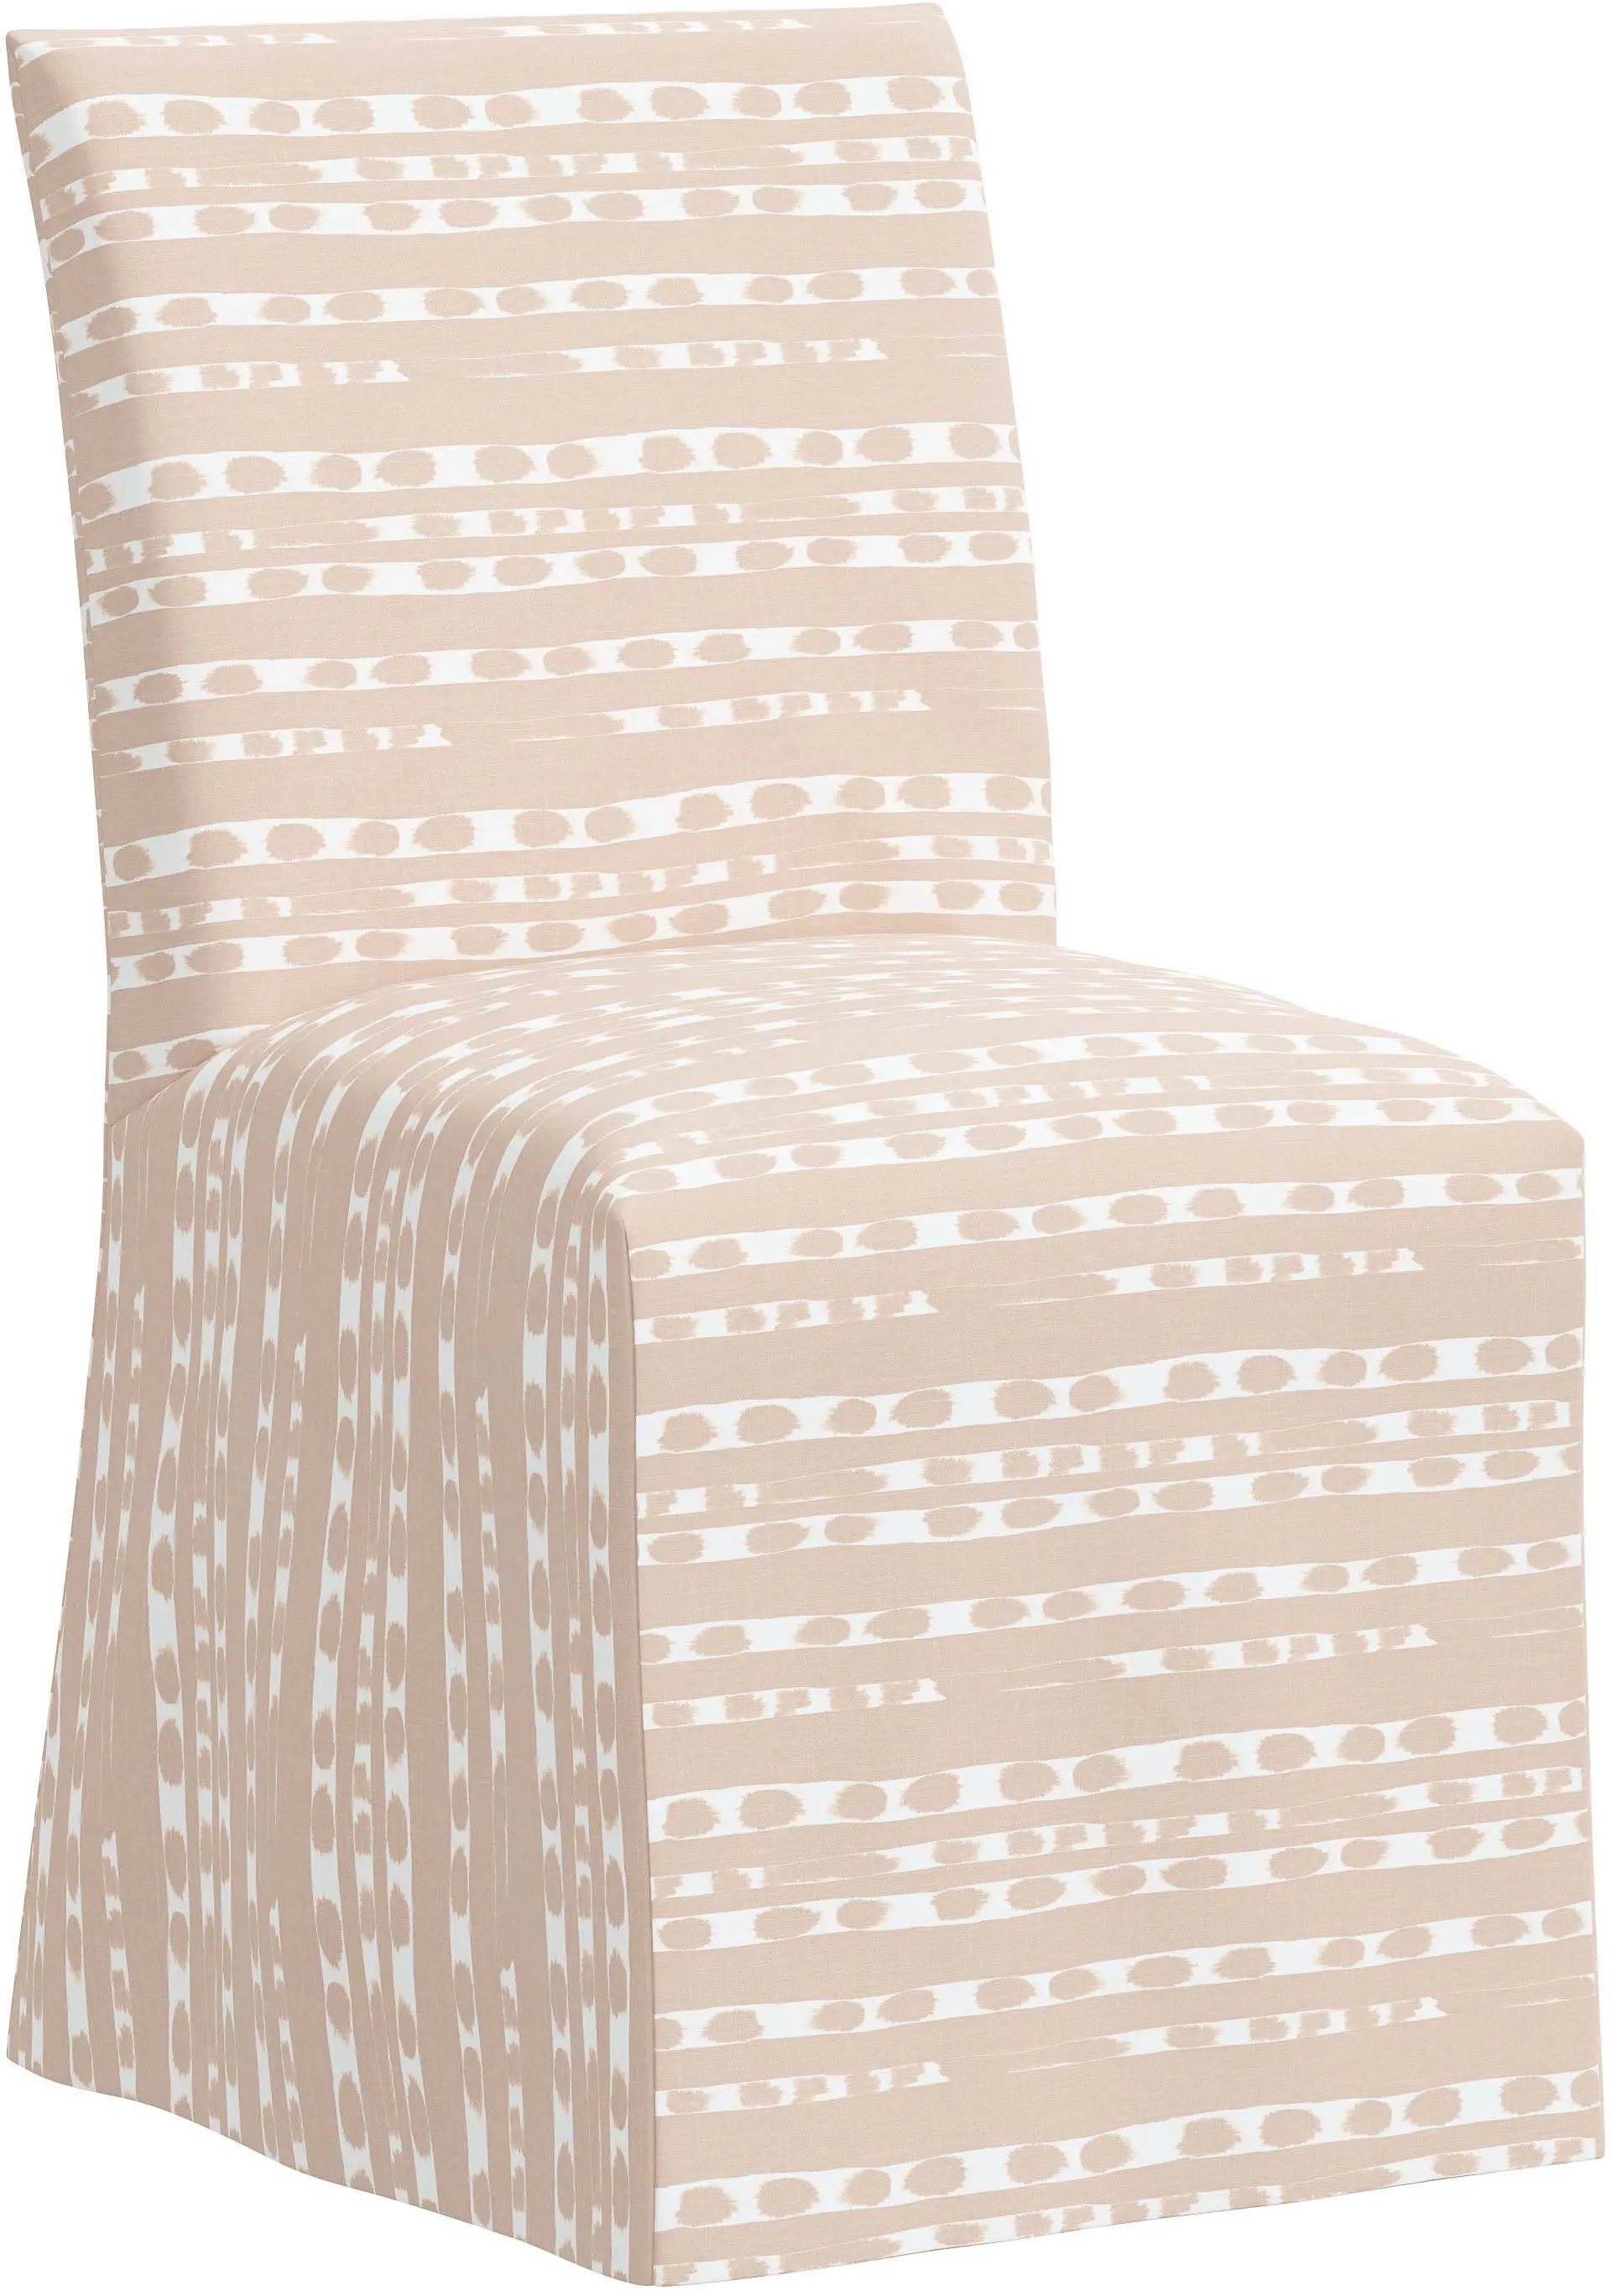 Kimberly Himari Soft Pink Slipcover Dining Chair - Skyline Furniture